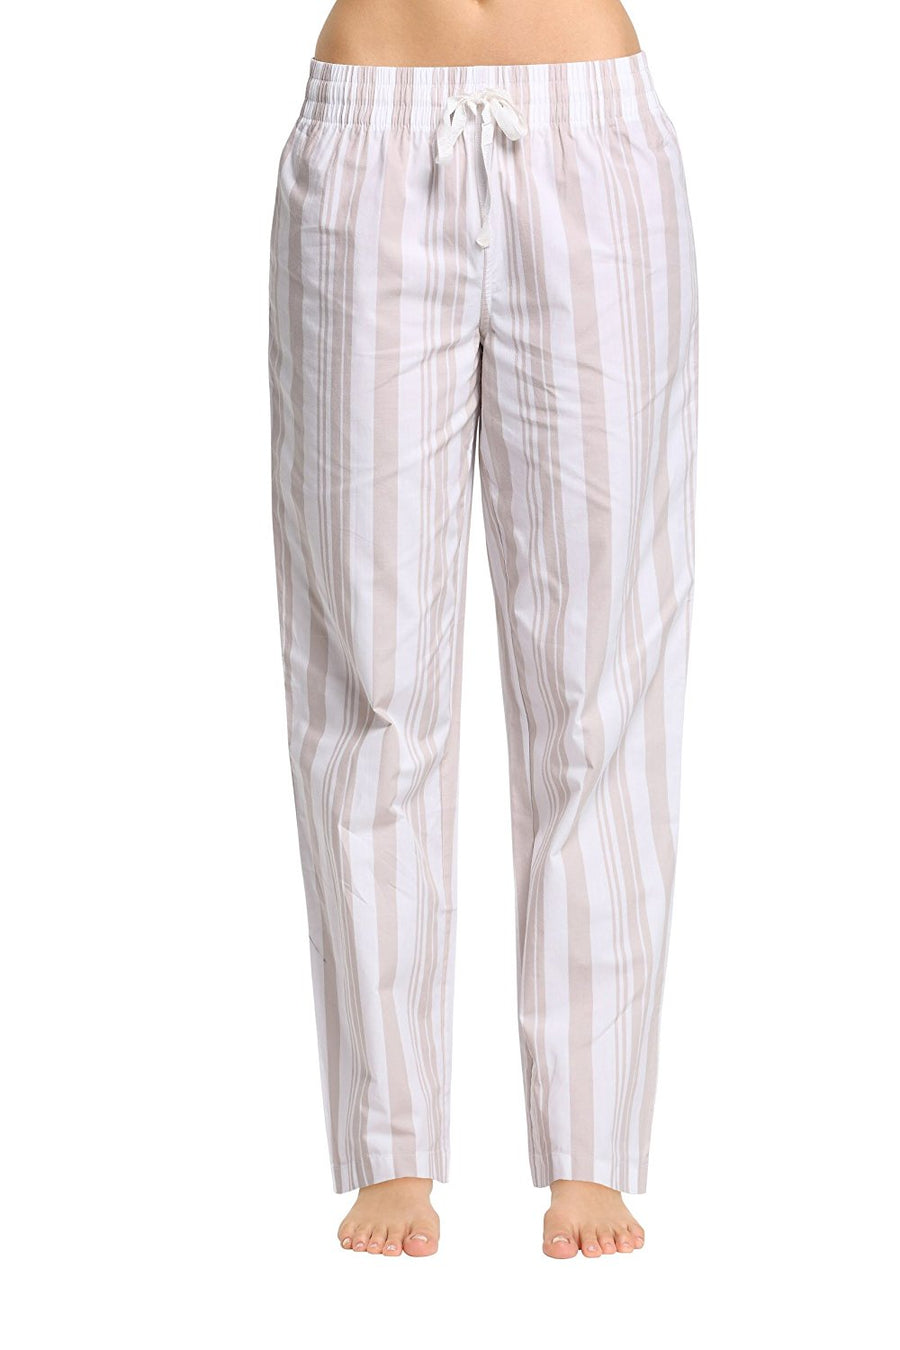 U2SKIIN Pajama Pants for Women Soft, 100% Cotton Comfortable